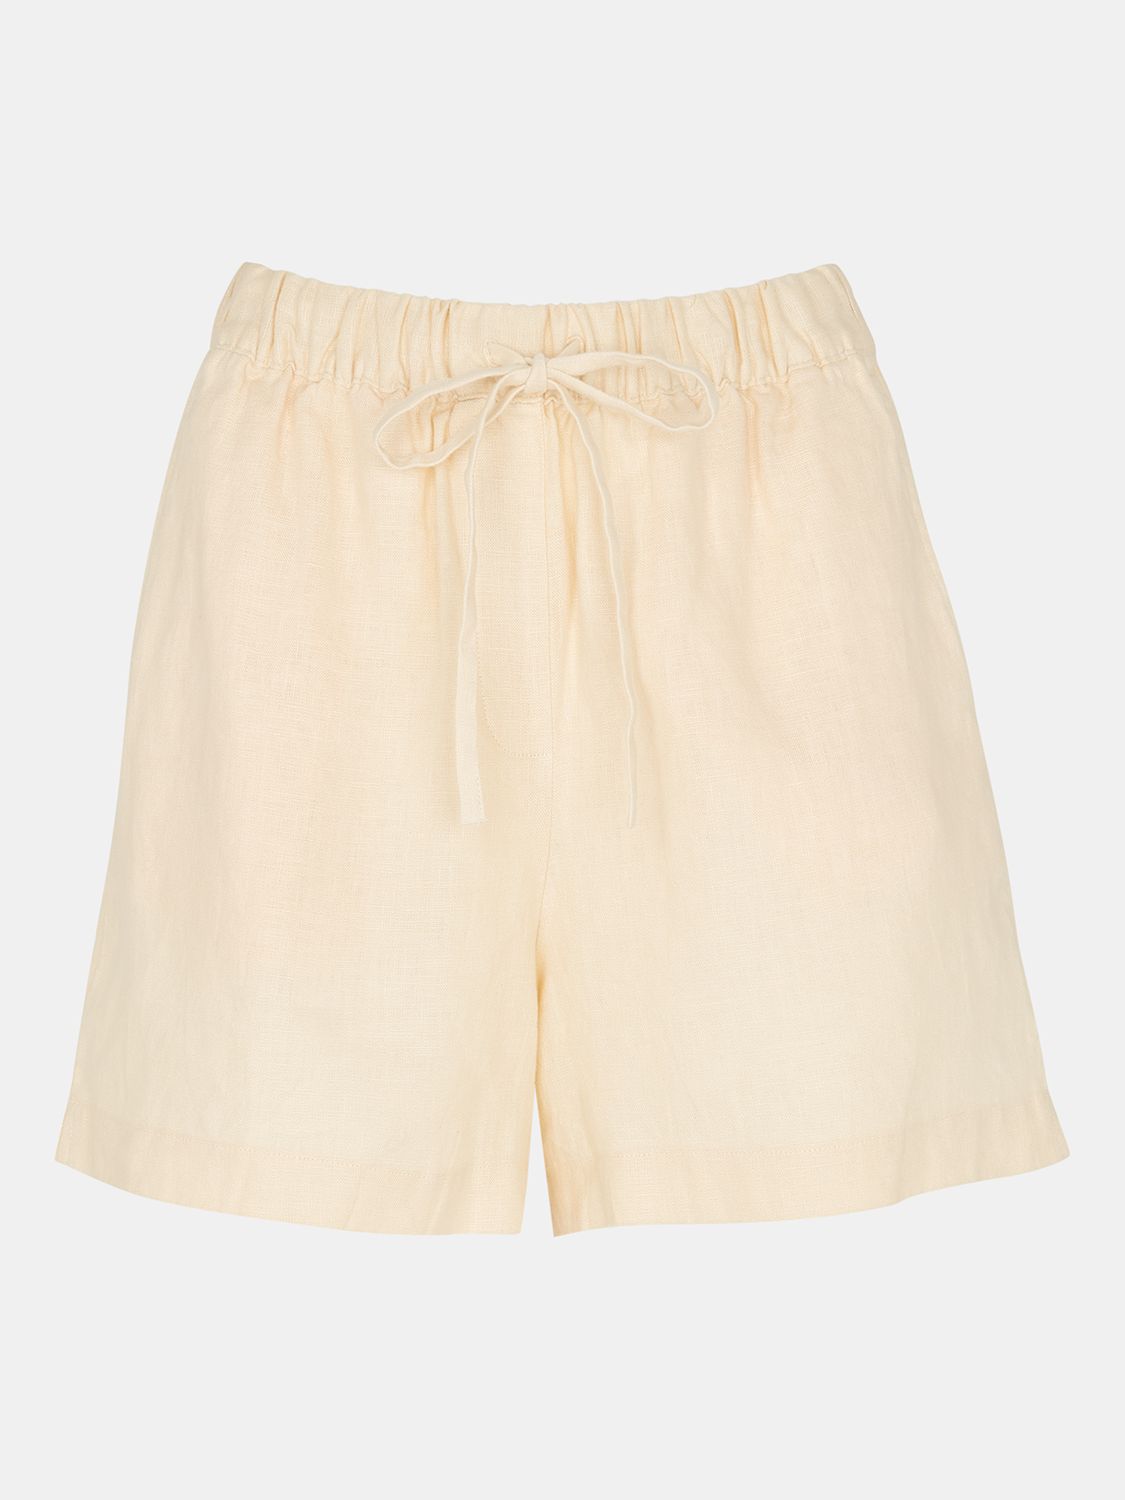 Whistles Elasticated Waist Linen Shorts, Ivory, 6